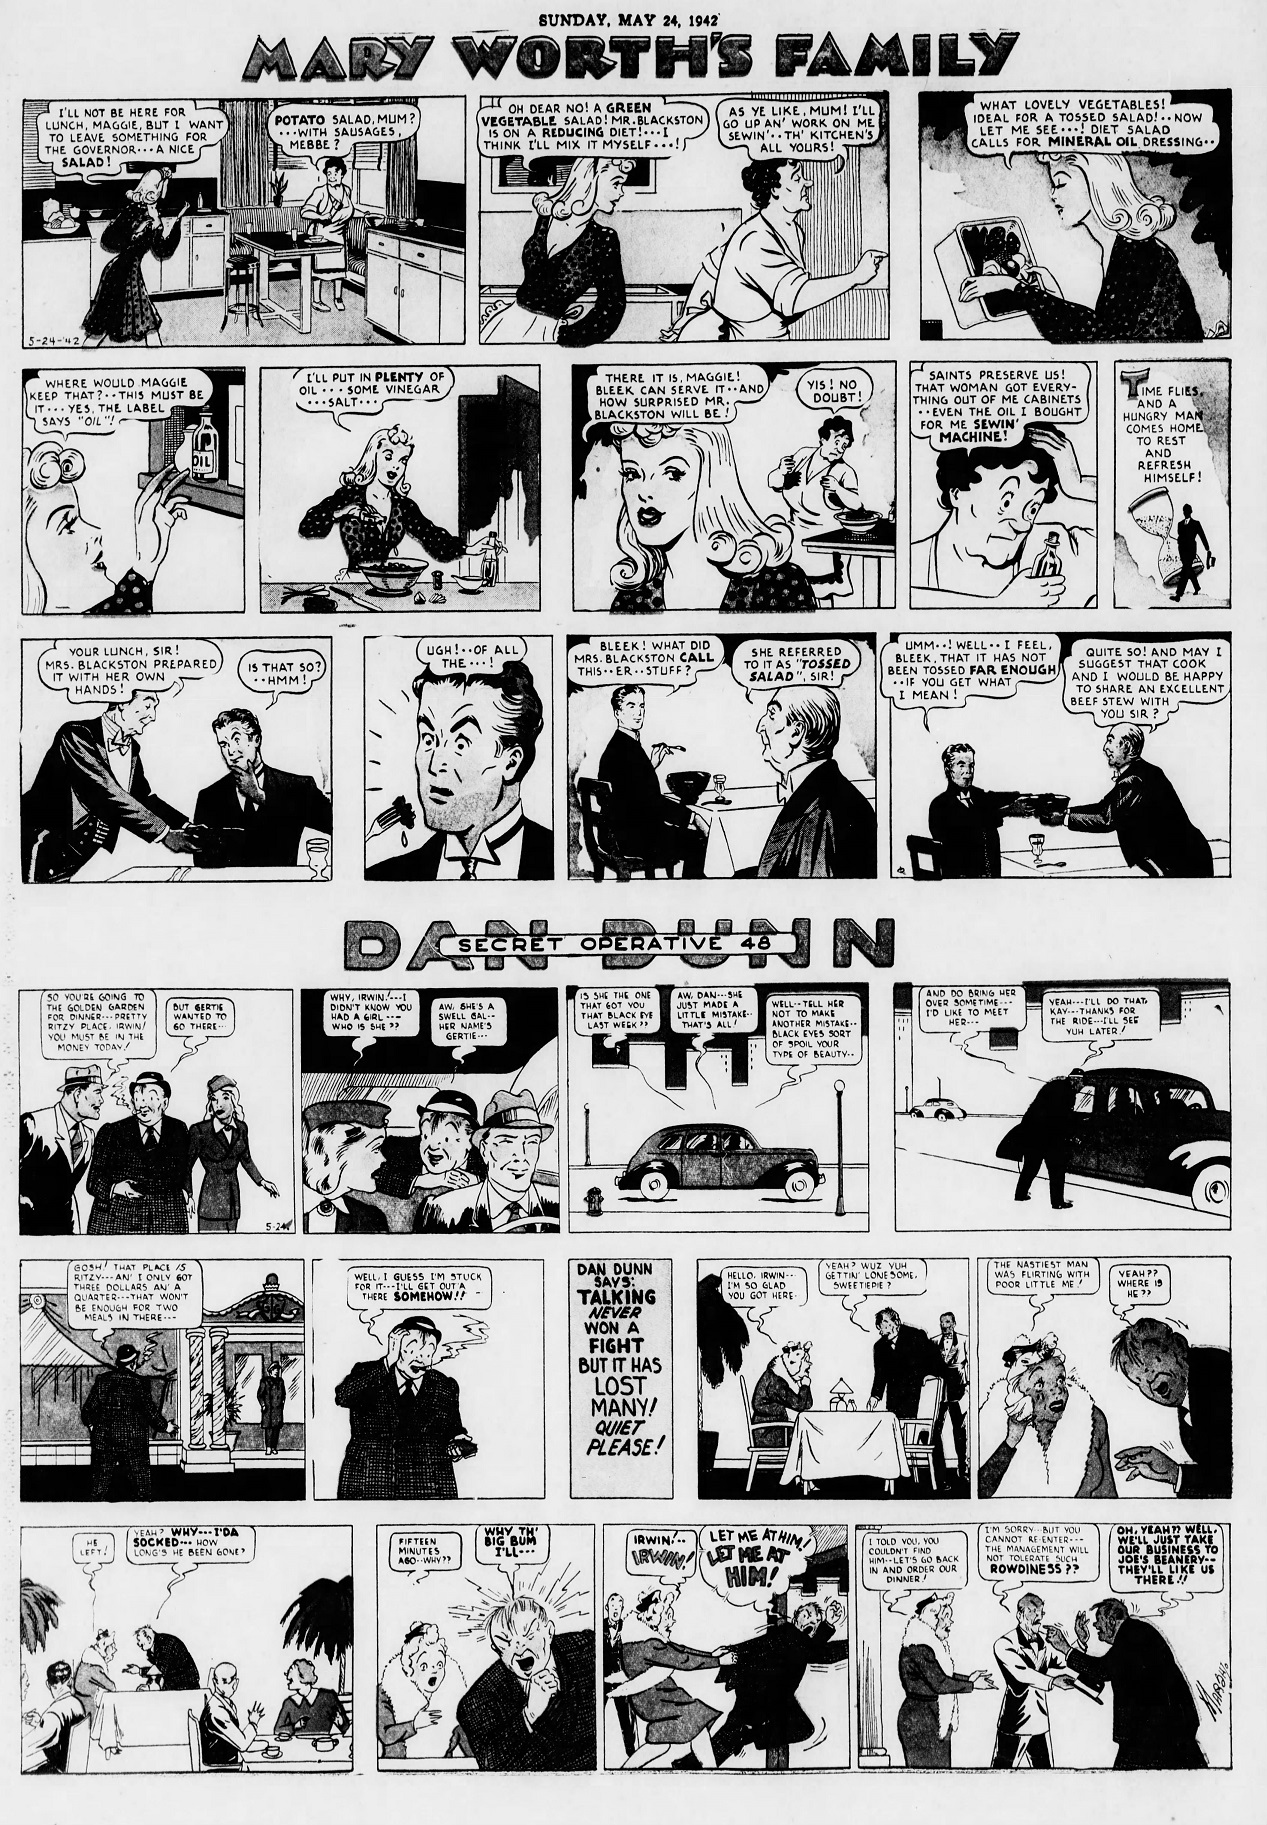 The_Brooklyn_Daily_Eagle_Sun__May_24__1942_(7).jpg